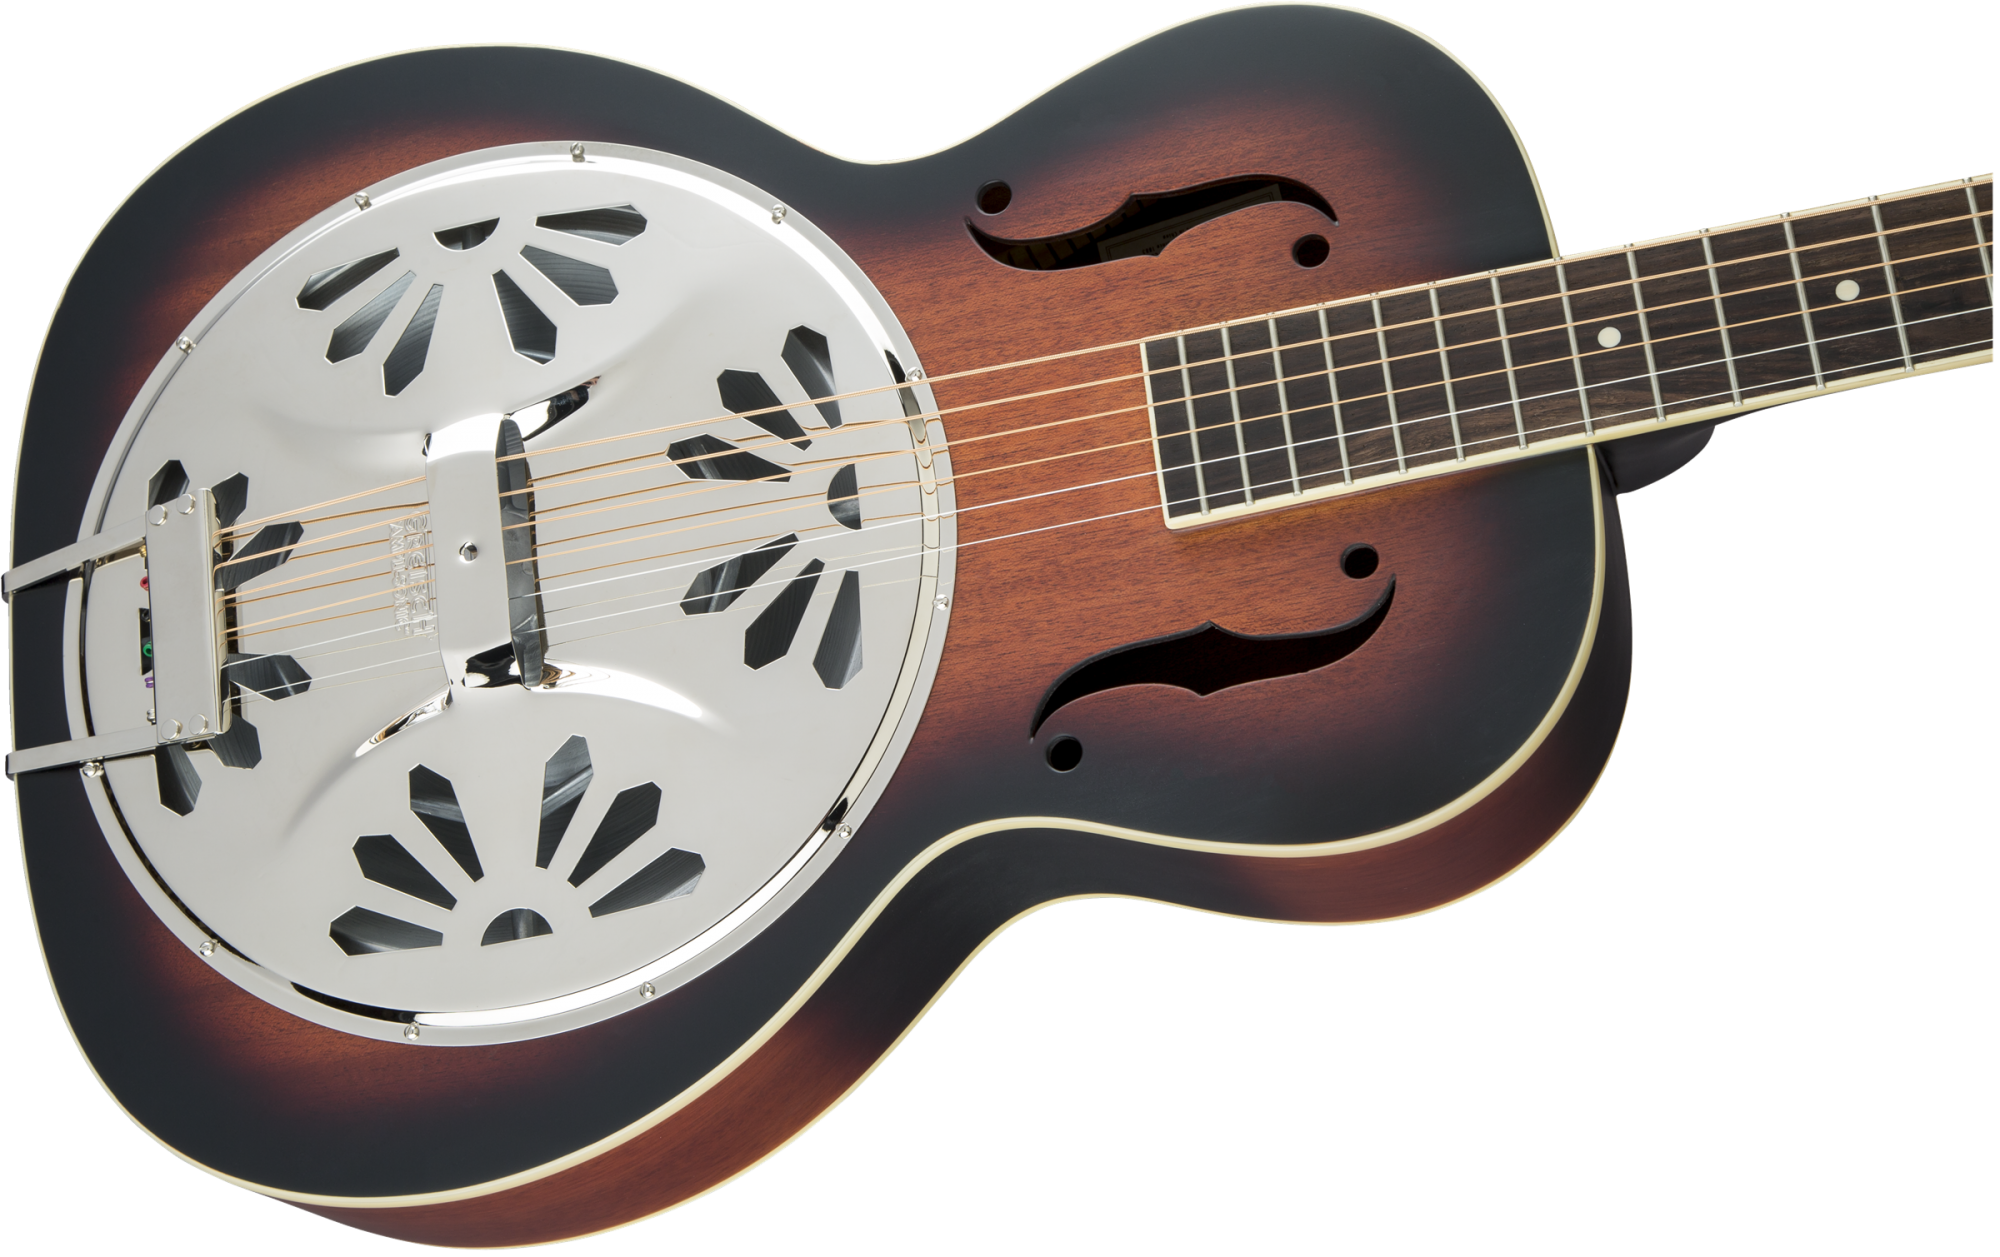 Gretsch G9220 Bobtail Mahogany Round Neck Acoustic/Electric Resonator Guitar